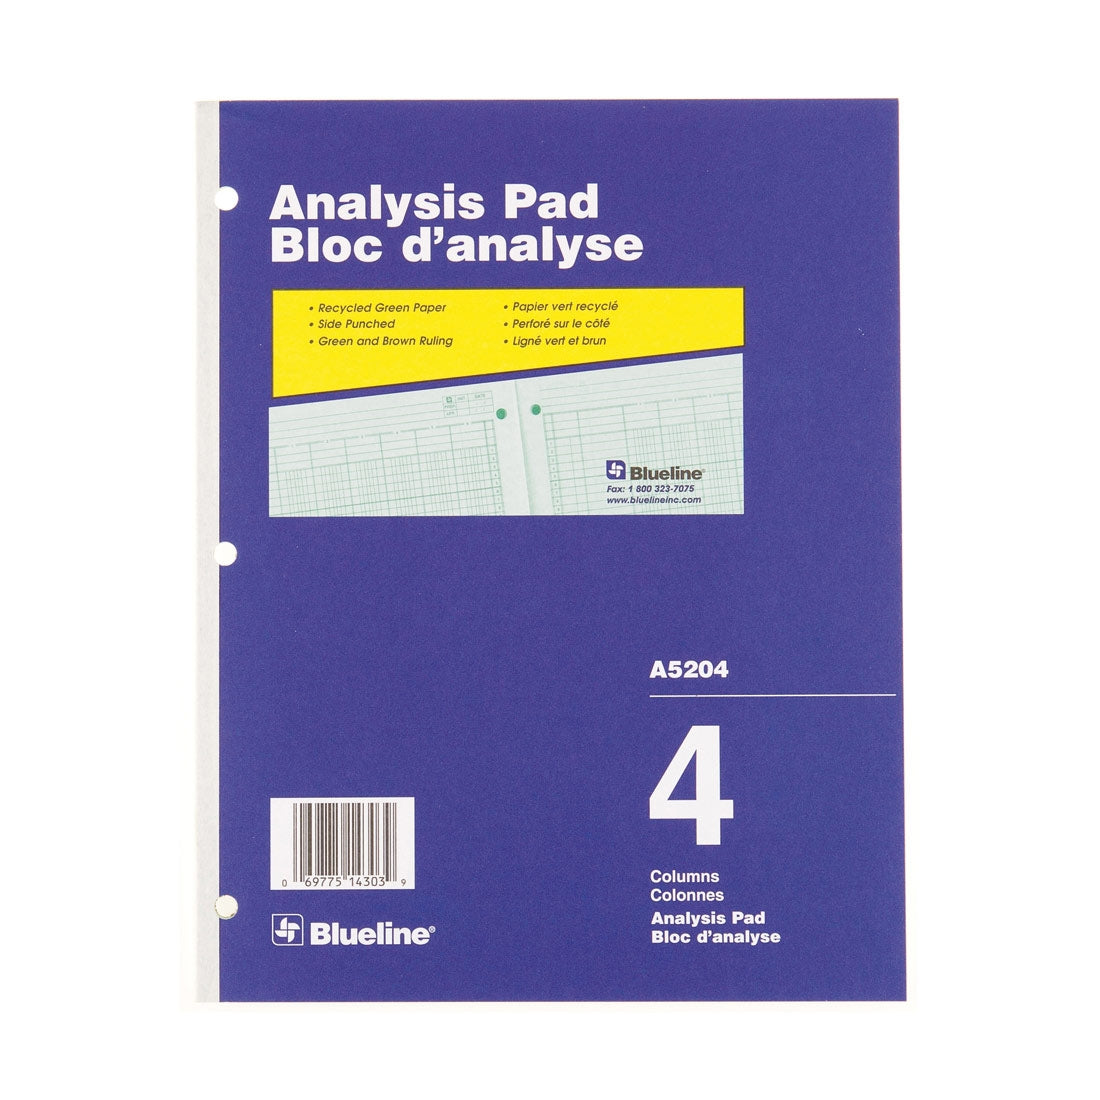 Analysis Pad - 4 Columns, A5204